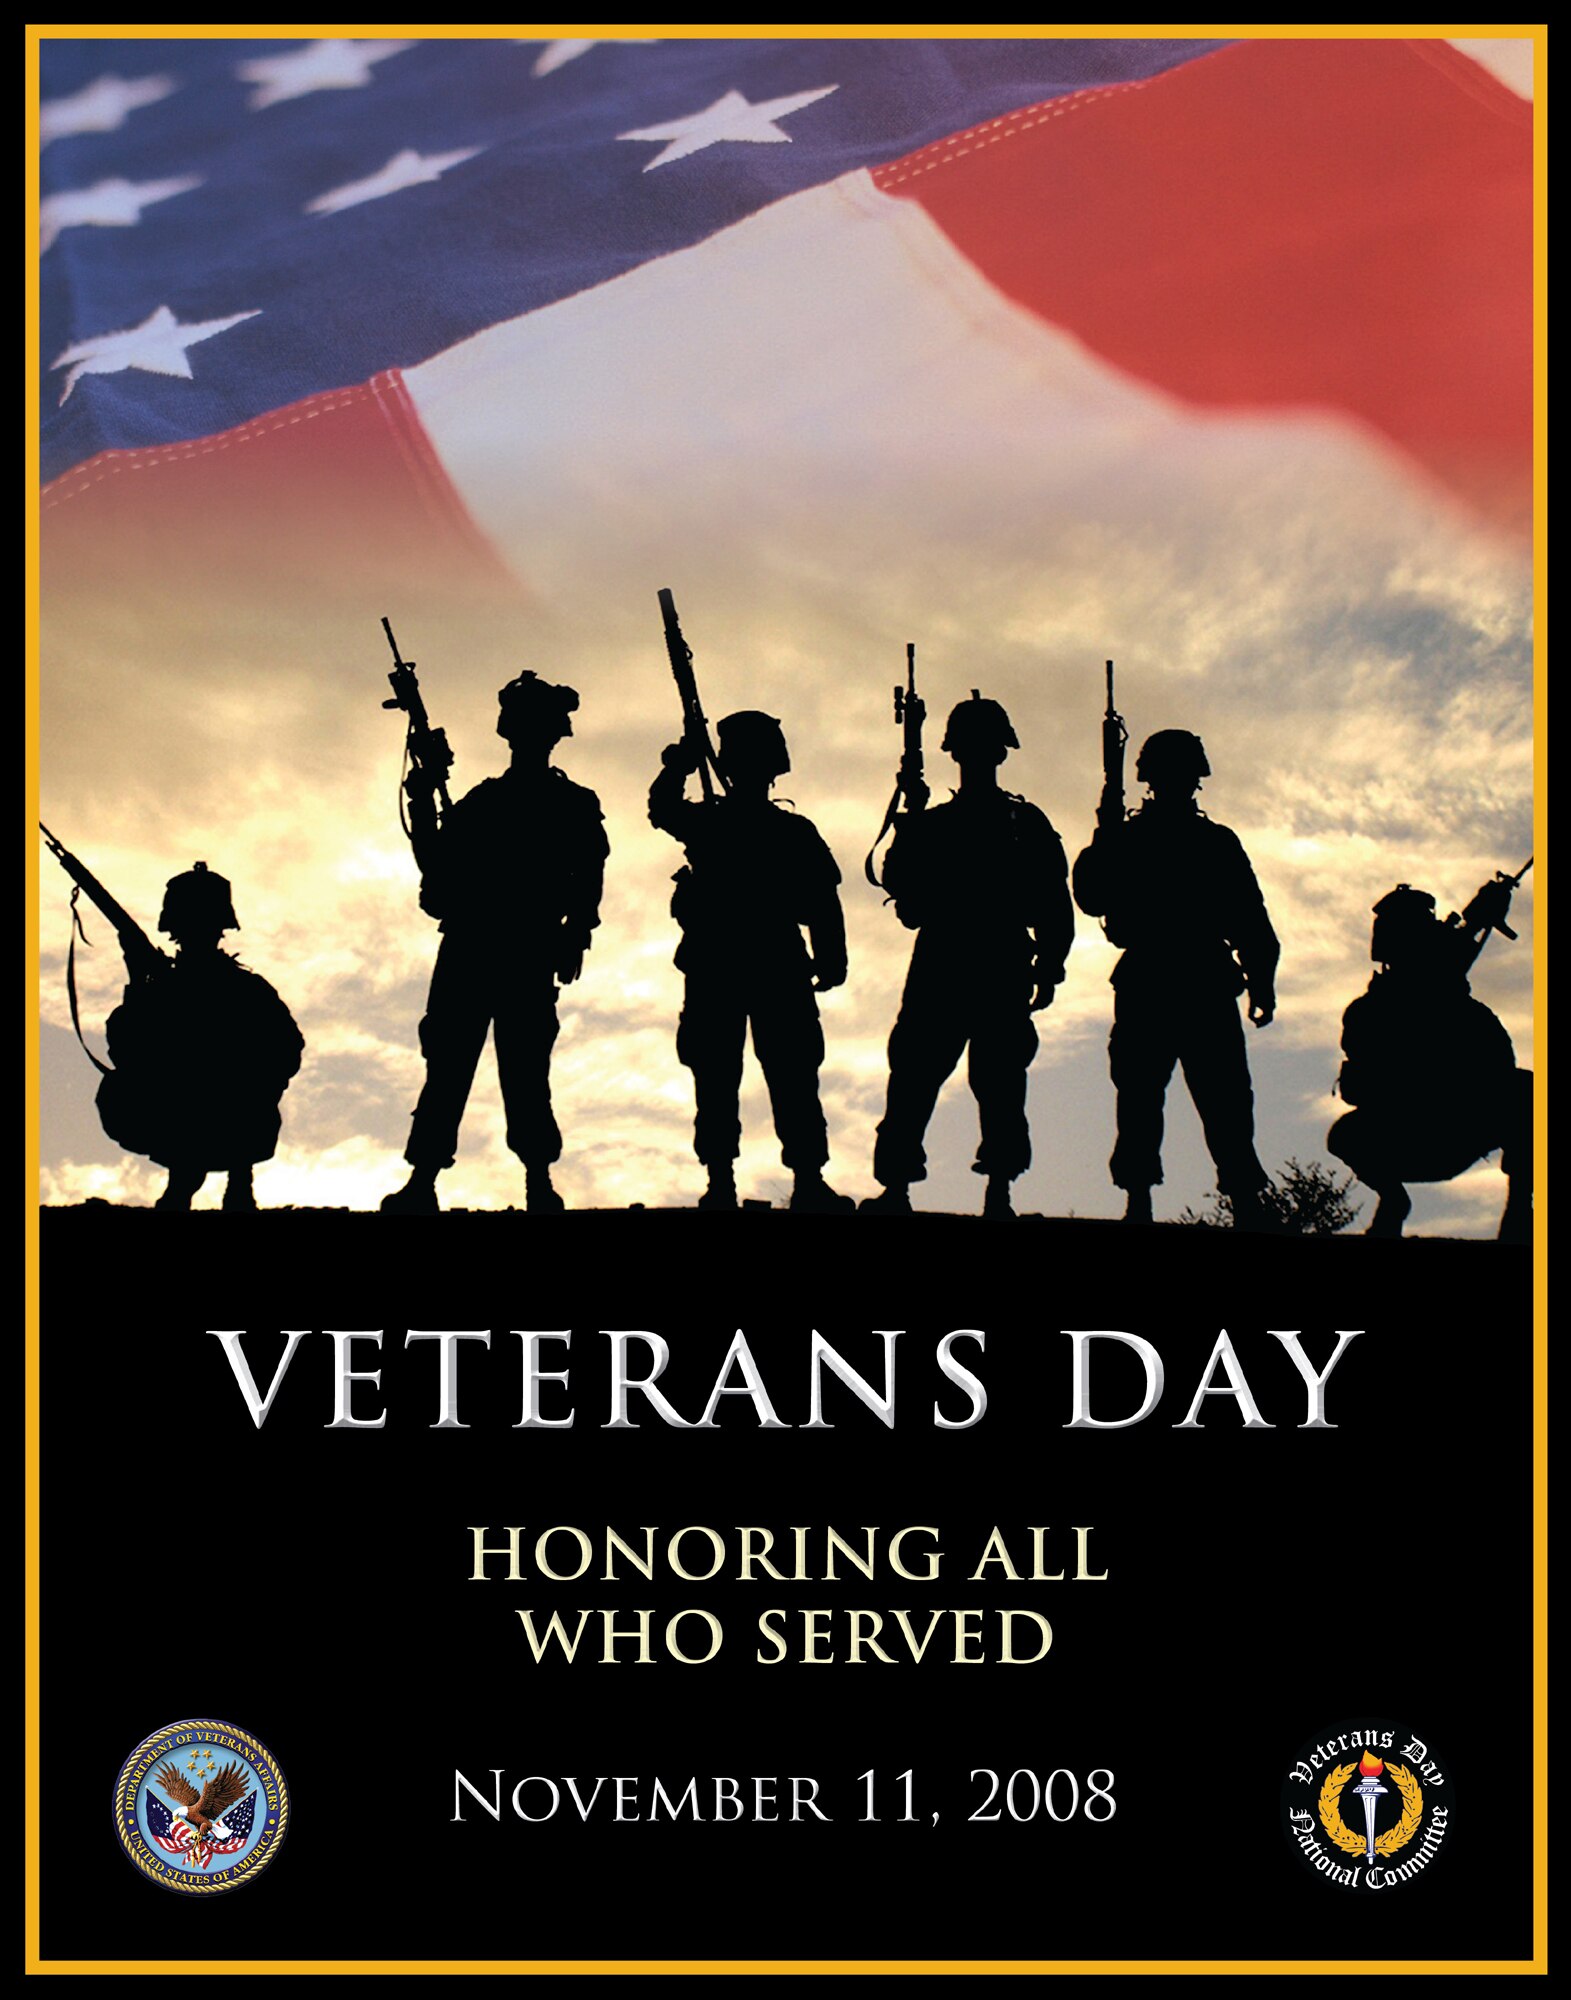 Veterans Day 20008 (photo illustration courtesy U.S. Department of Veterans Affairs)